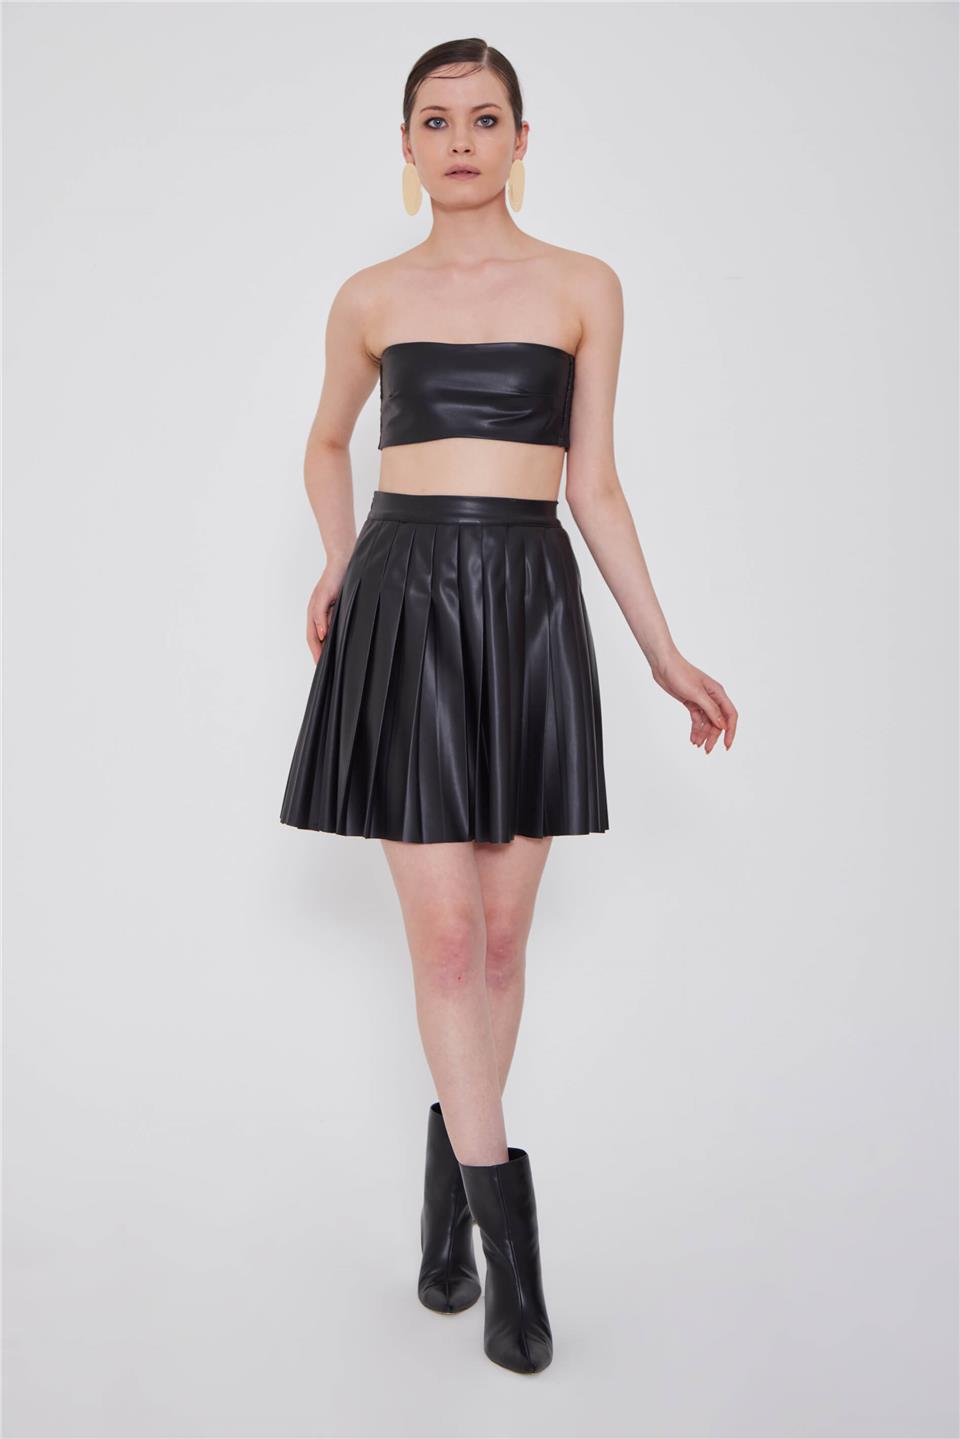 A model wears LFN10765 - Pu Leather Mını Pleat Skırt Deep Ink Black - Siyah, wholesale Skirt of Lefon to display at Lonca